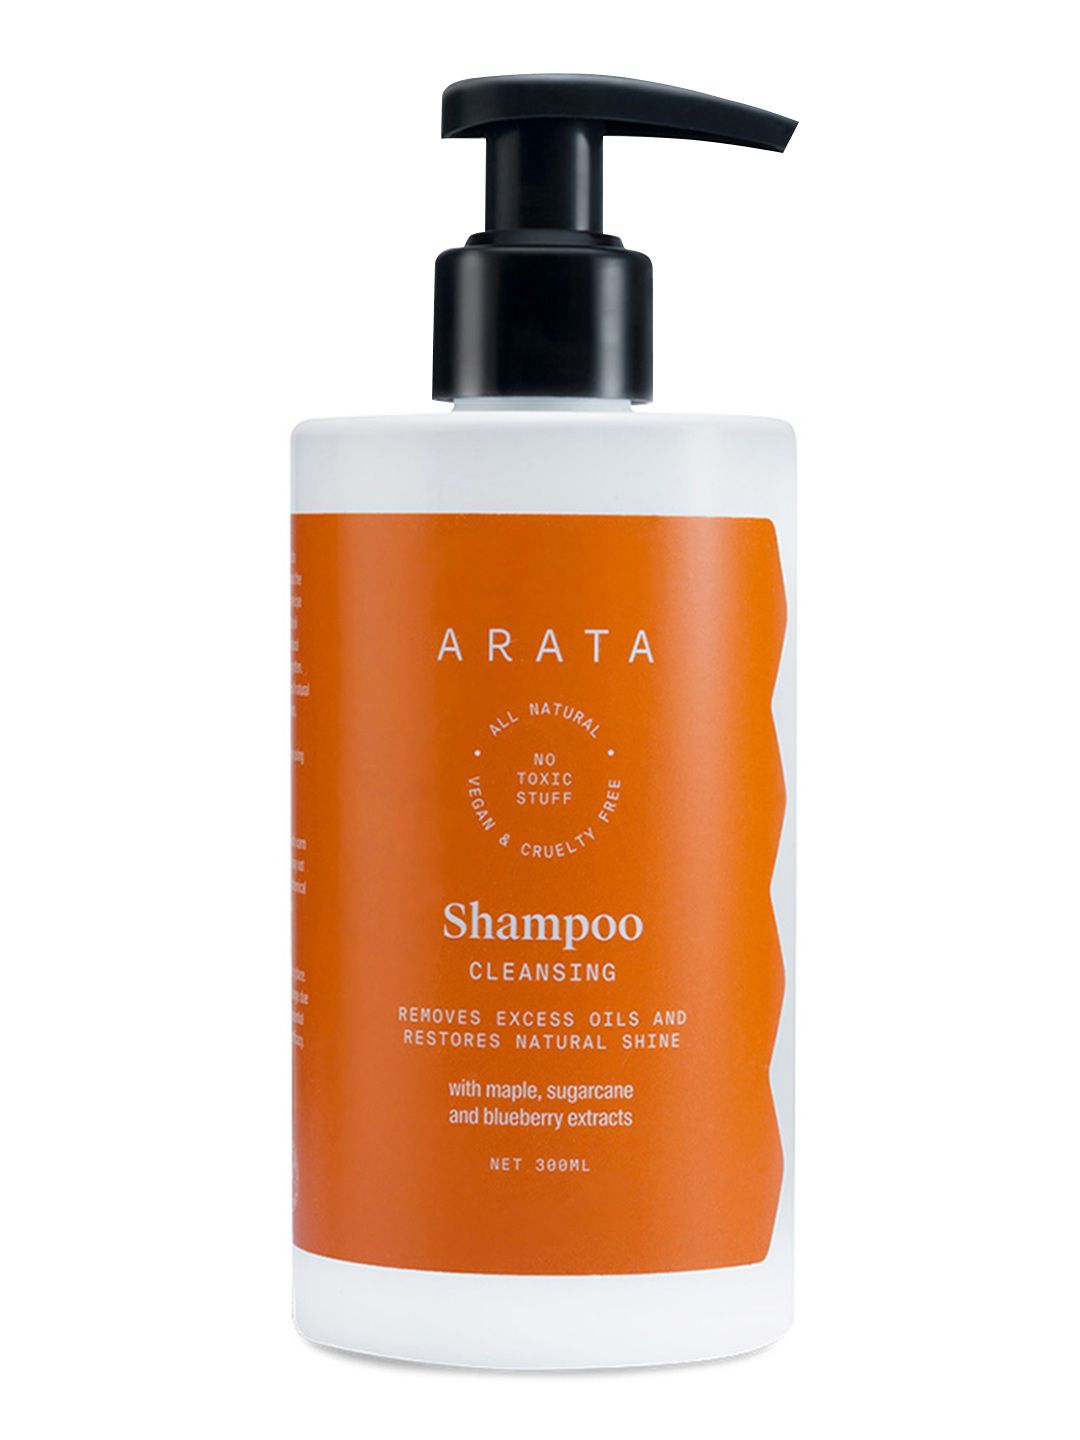 ARATA Unisex Natural Cleansing Shampoo 300ml Price in India